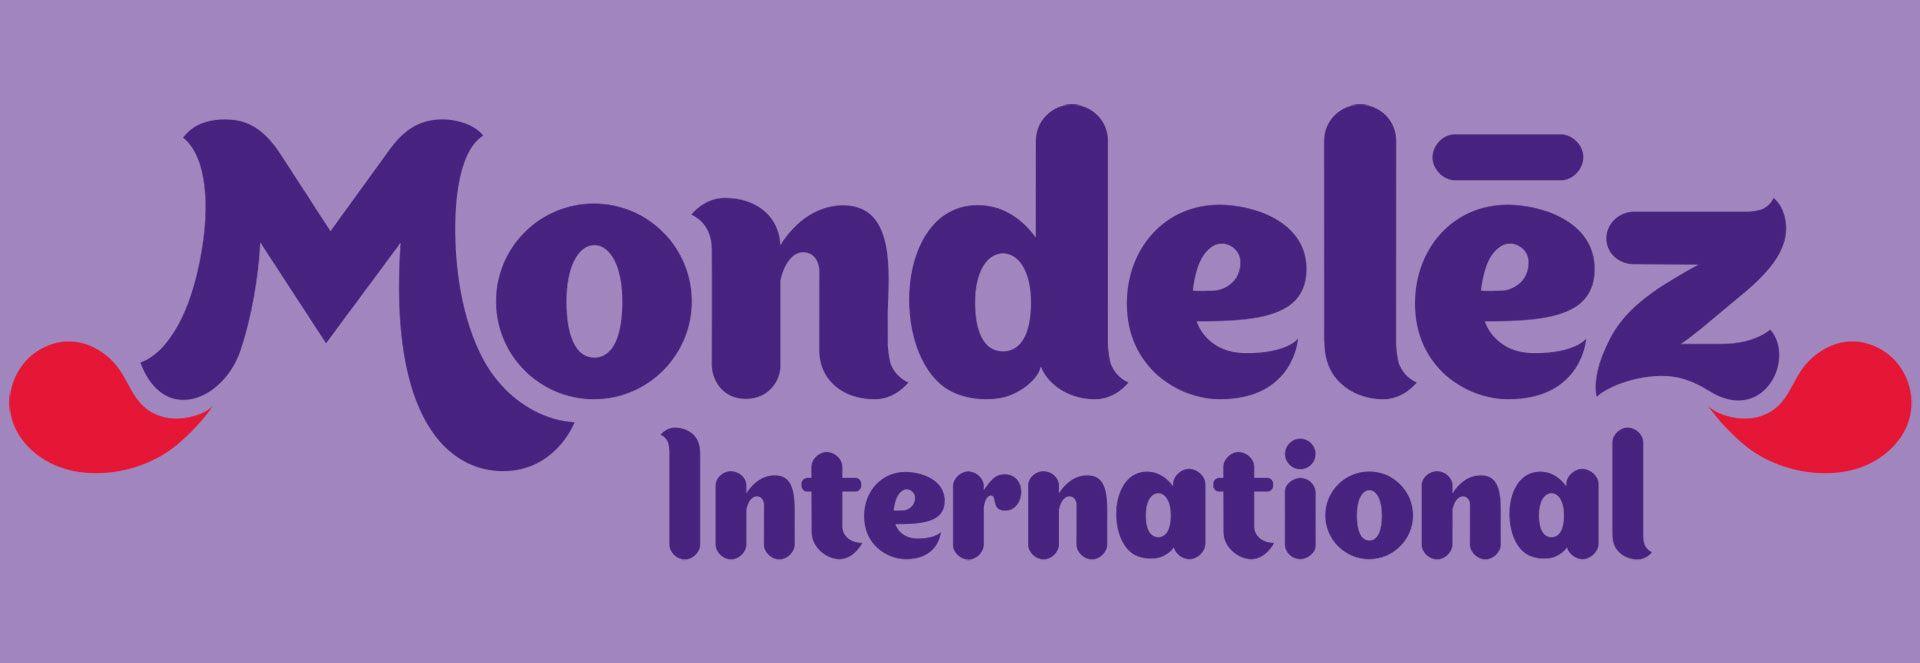 Mondolez Logo - Mondelez: 'We Are Uniquely Positioned to Lead the Future of Snacking'